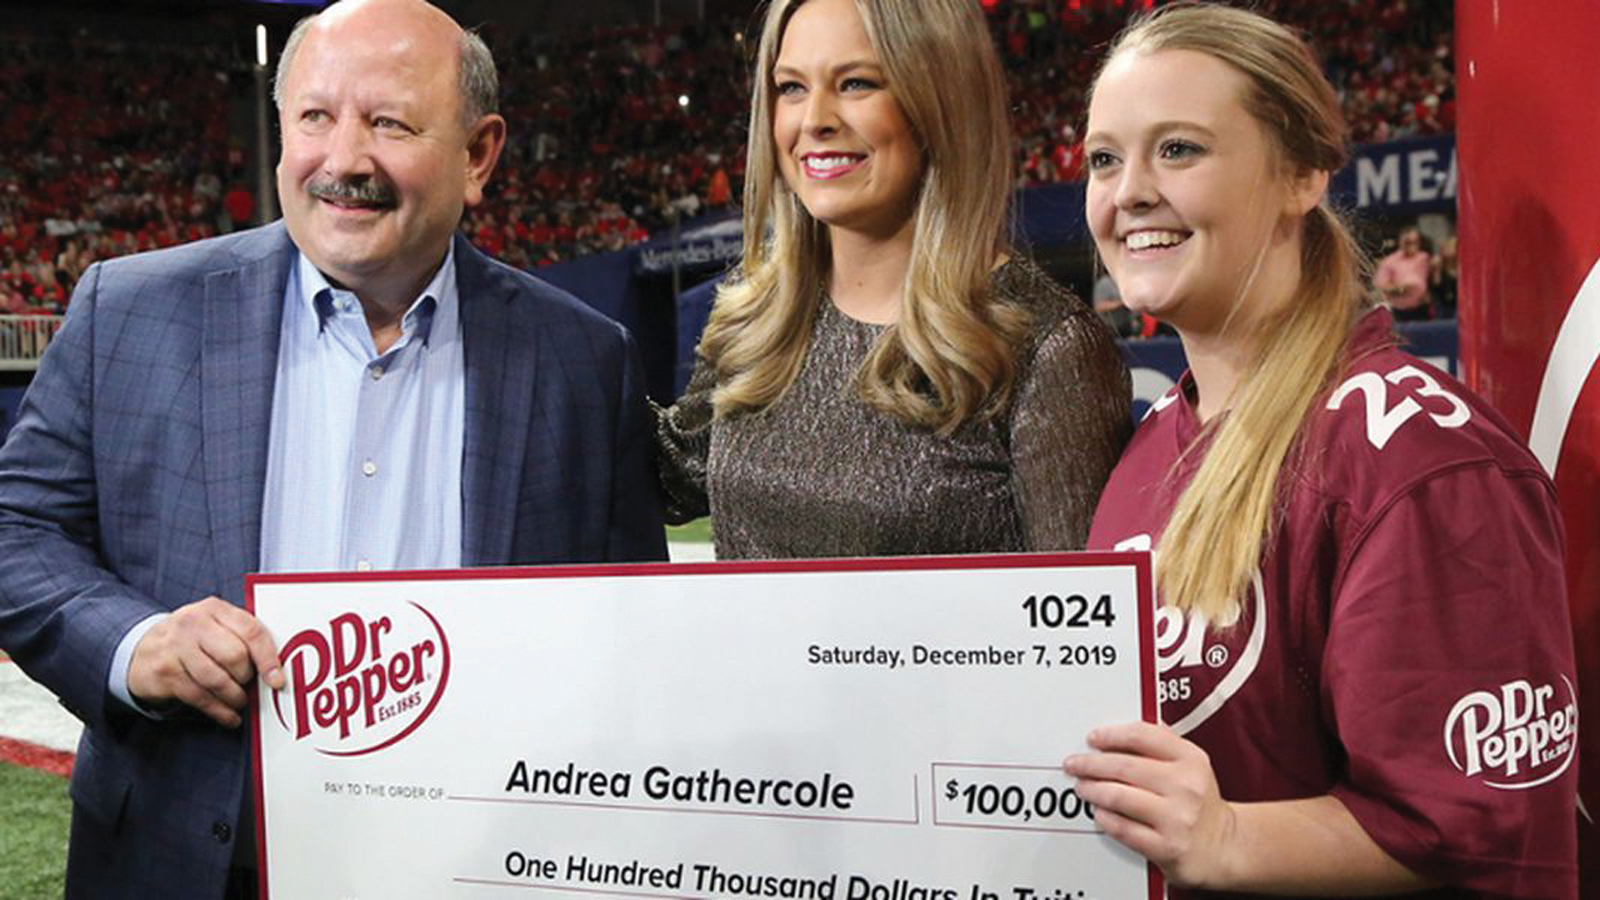 Andrea Gathercole wins $100,000 worth of tuition money